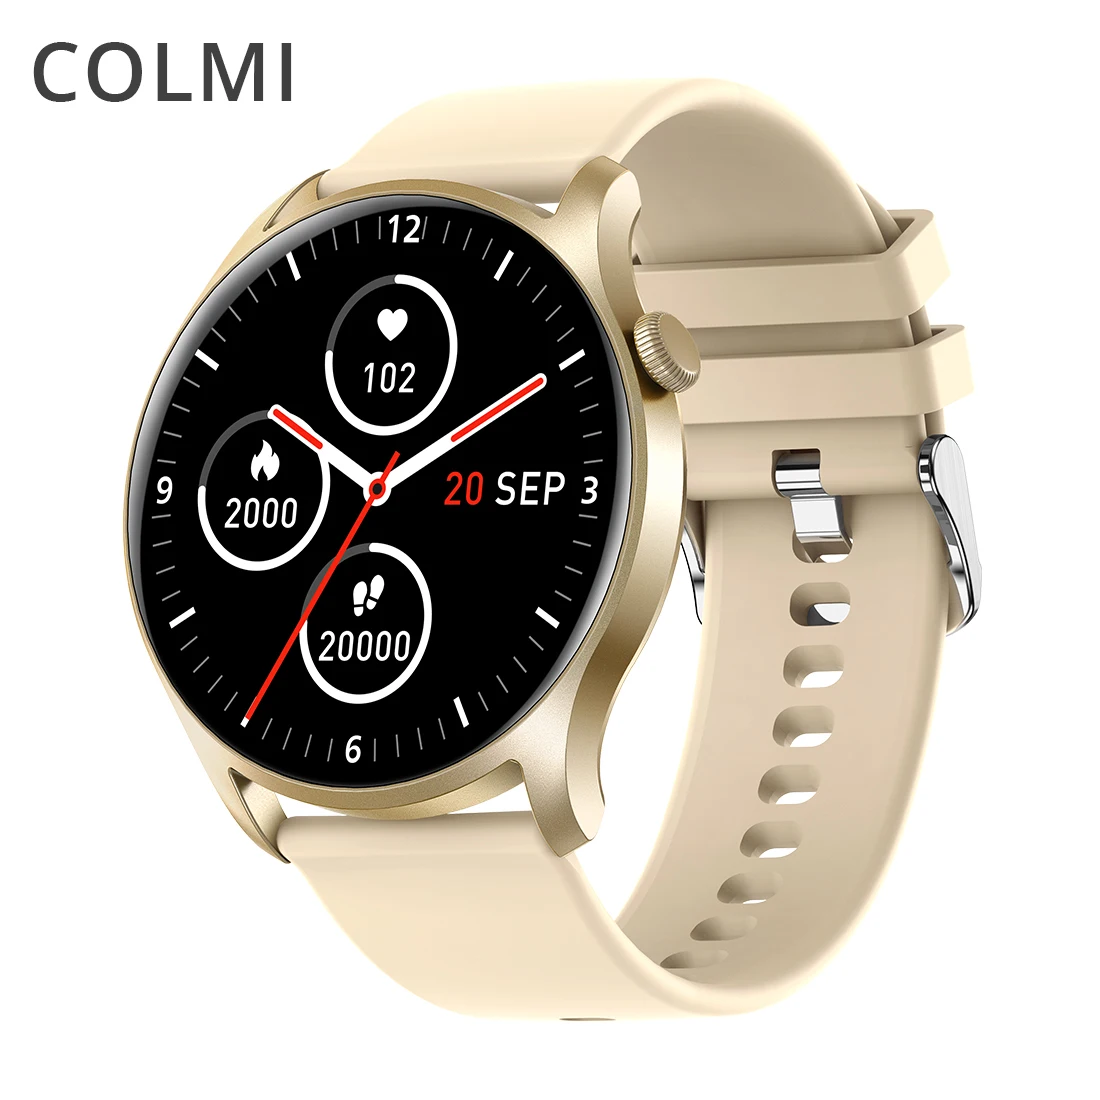 

New Version Fit Pro Smart Watch Ticwatchdisplay Smartwatchpraij With Calling Feature Smartwatchben10 Omnitri Ben10